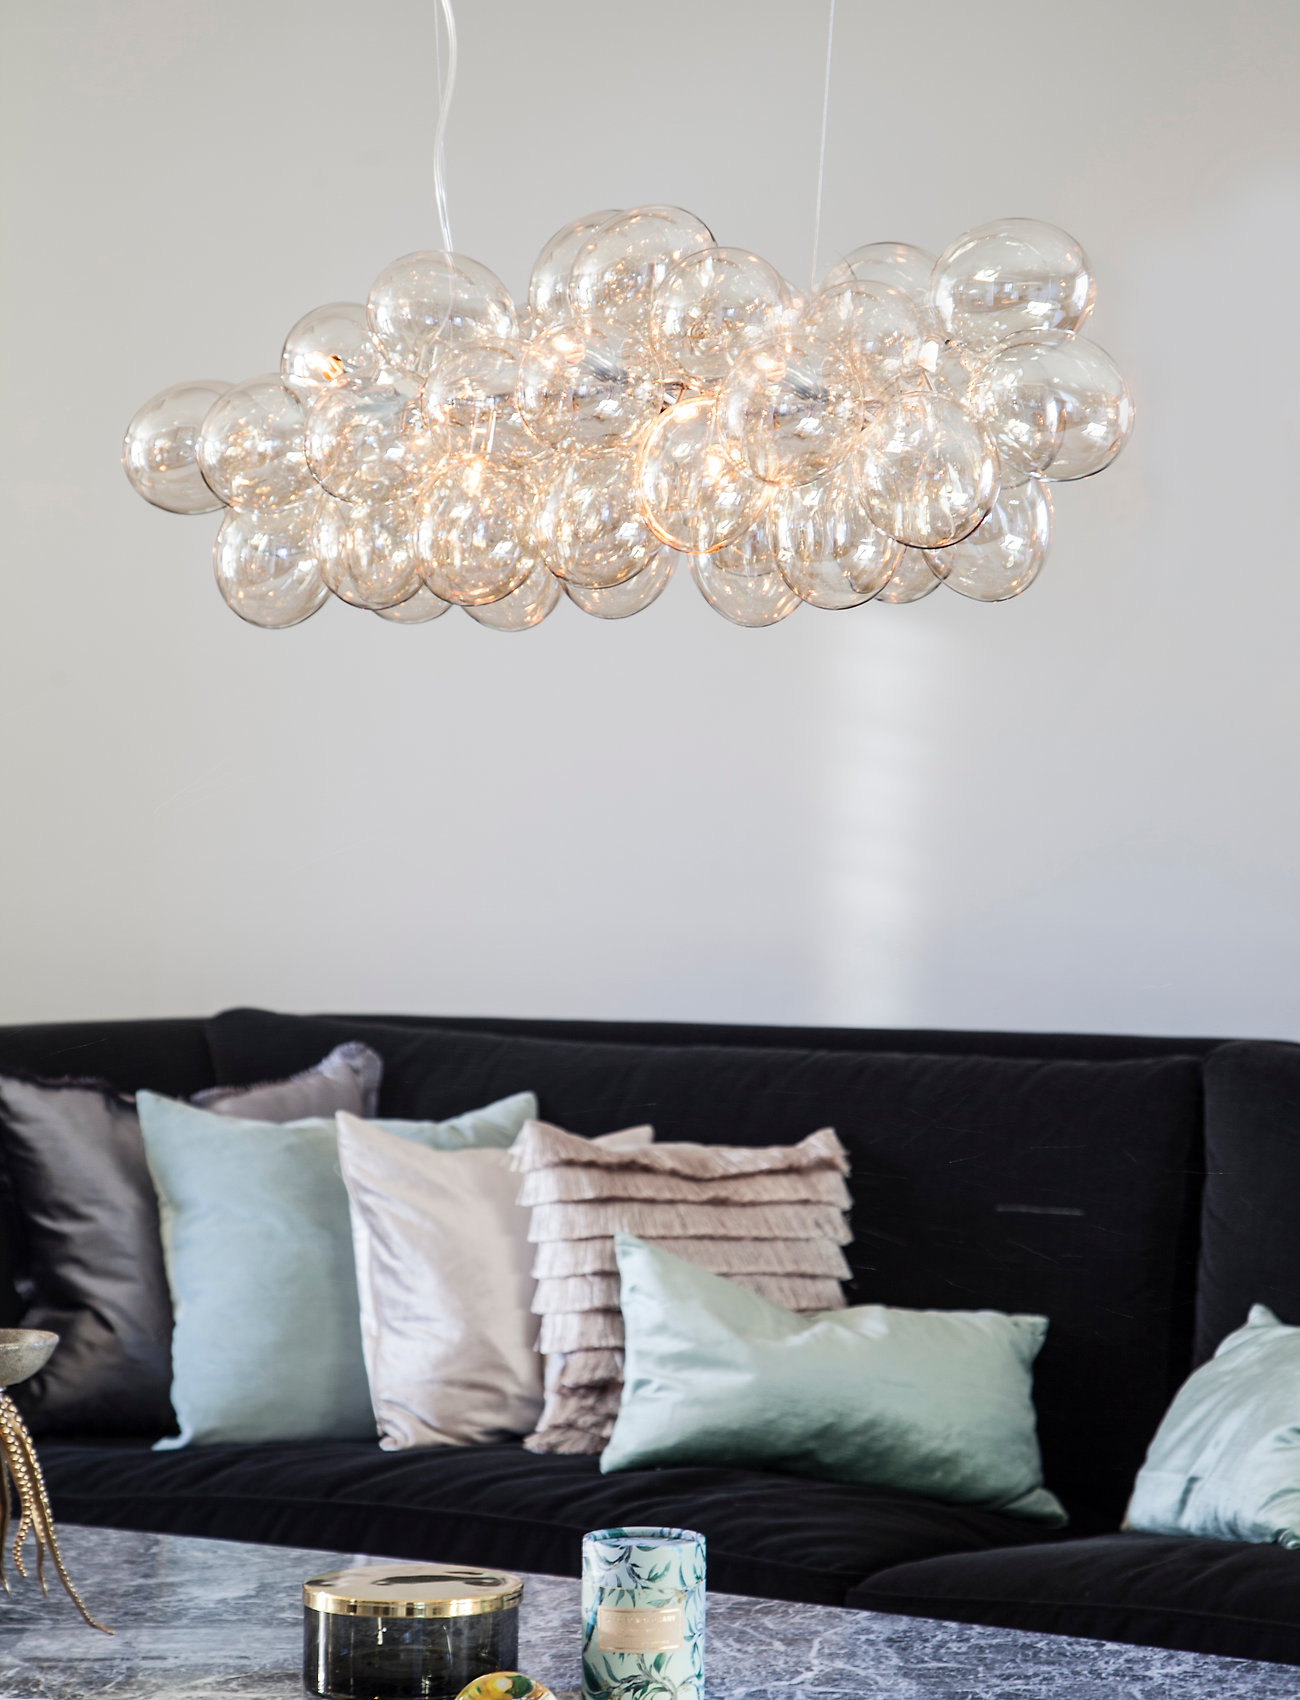 By Rydéns - Gross Bar ceilinglamp L80cm - hanglampen - amber - 1